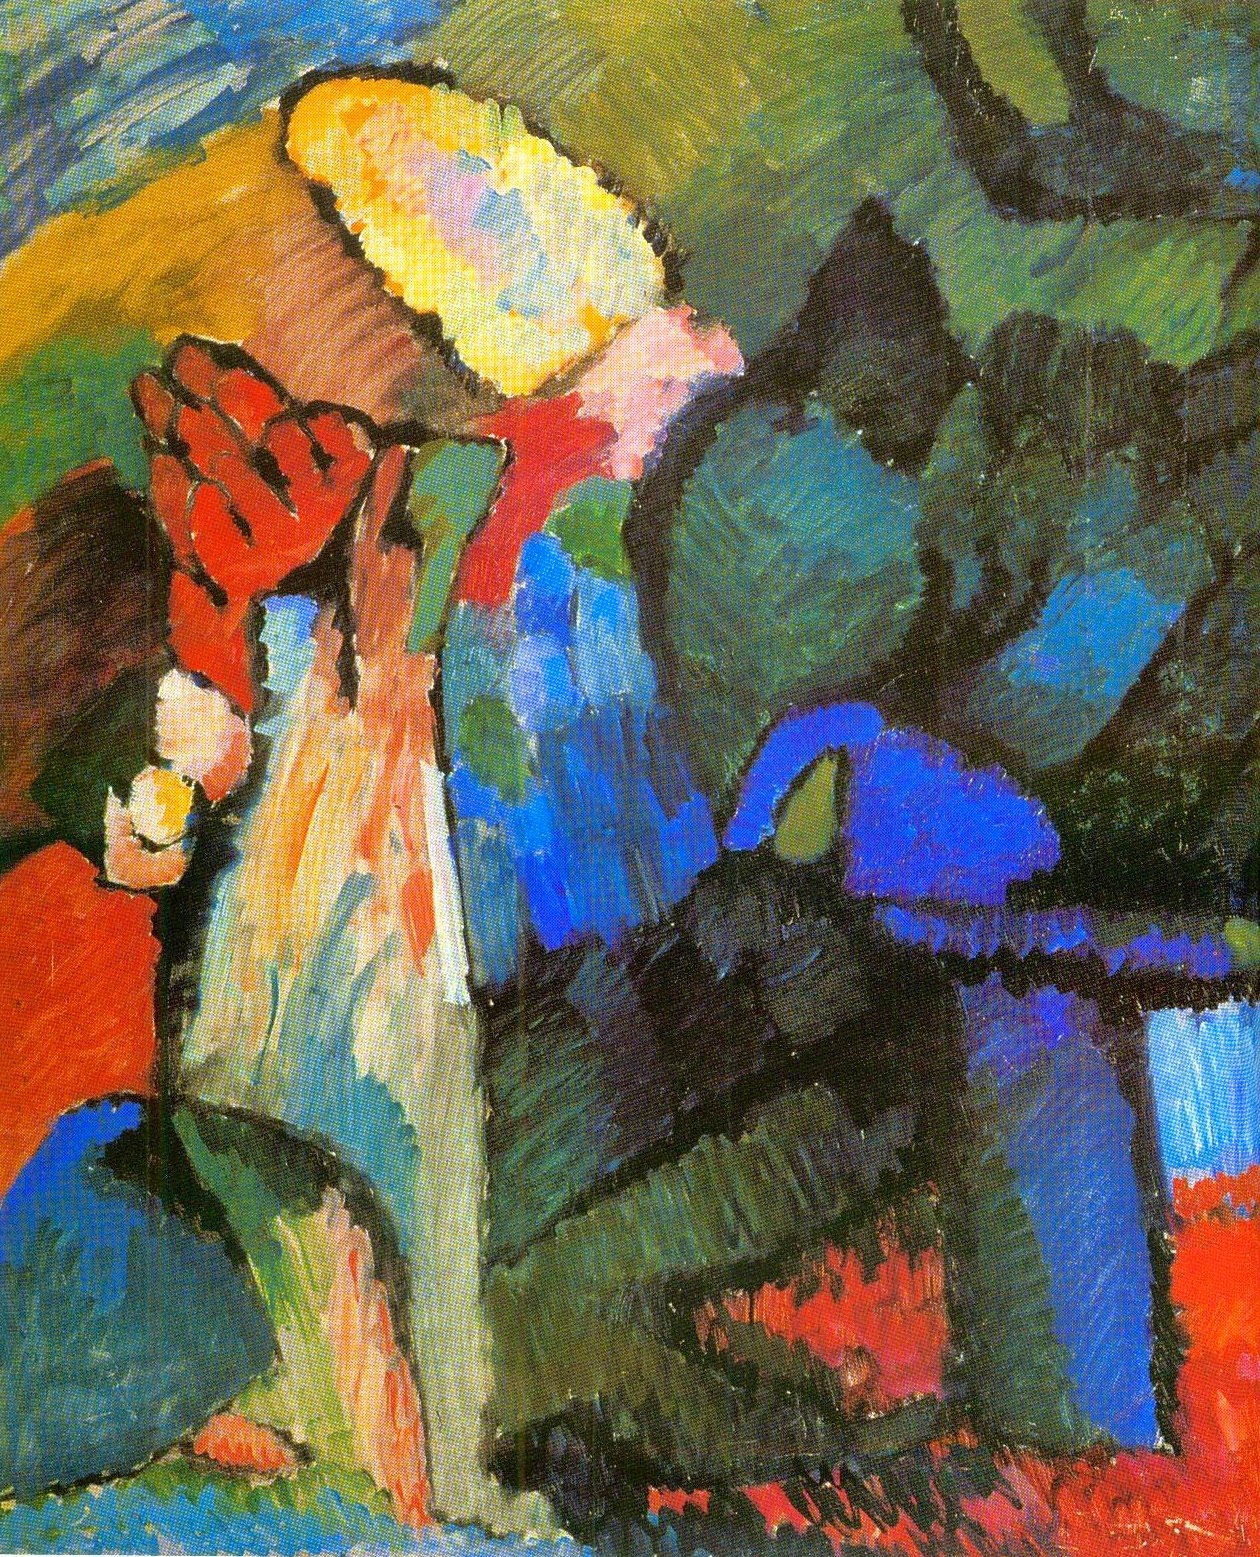 Wassily+Kandinsky-1866-1944 (320).jpg